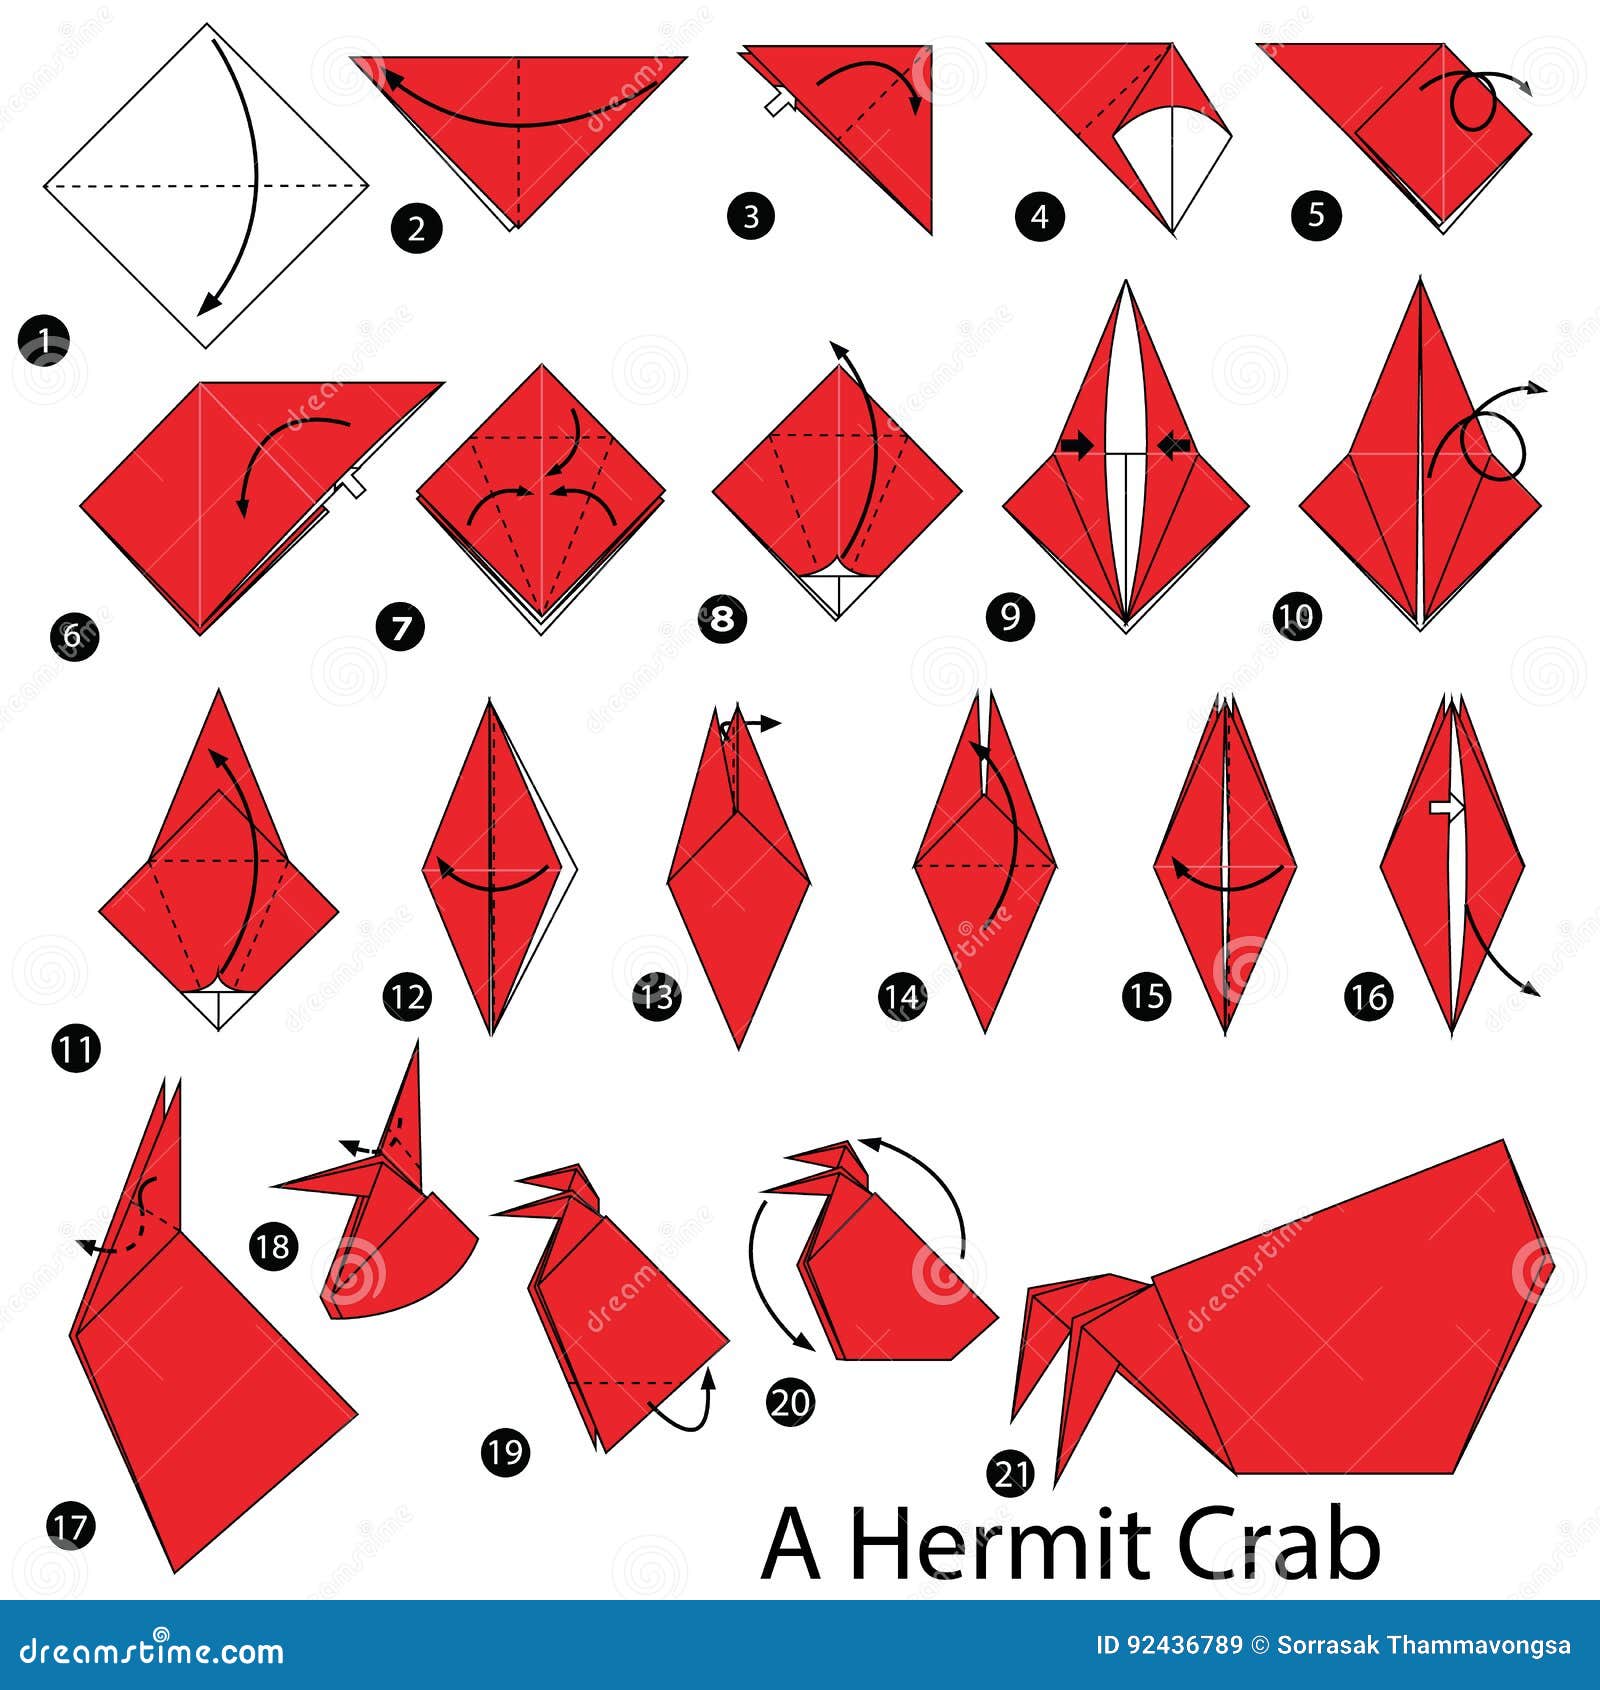 origami hermit crab instructions